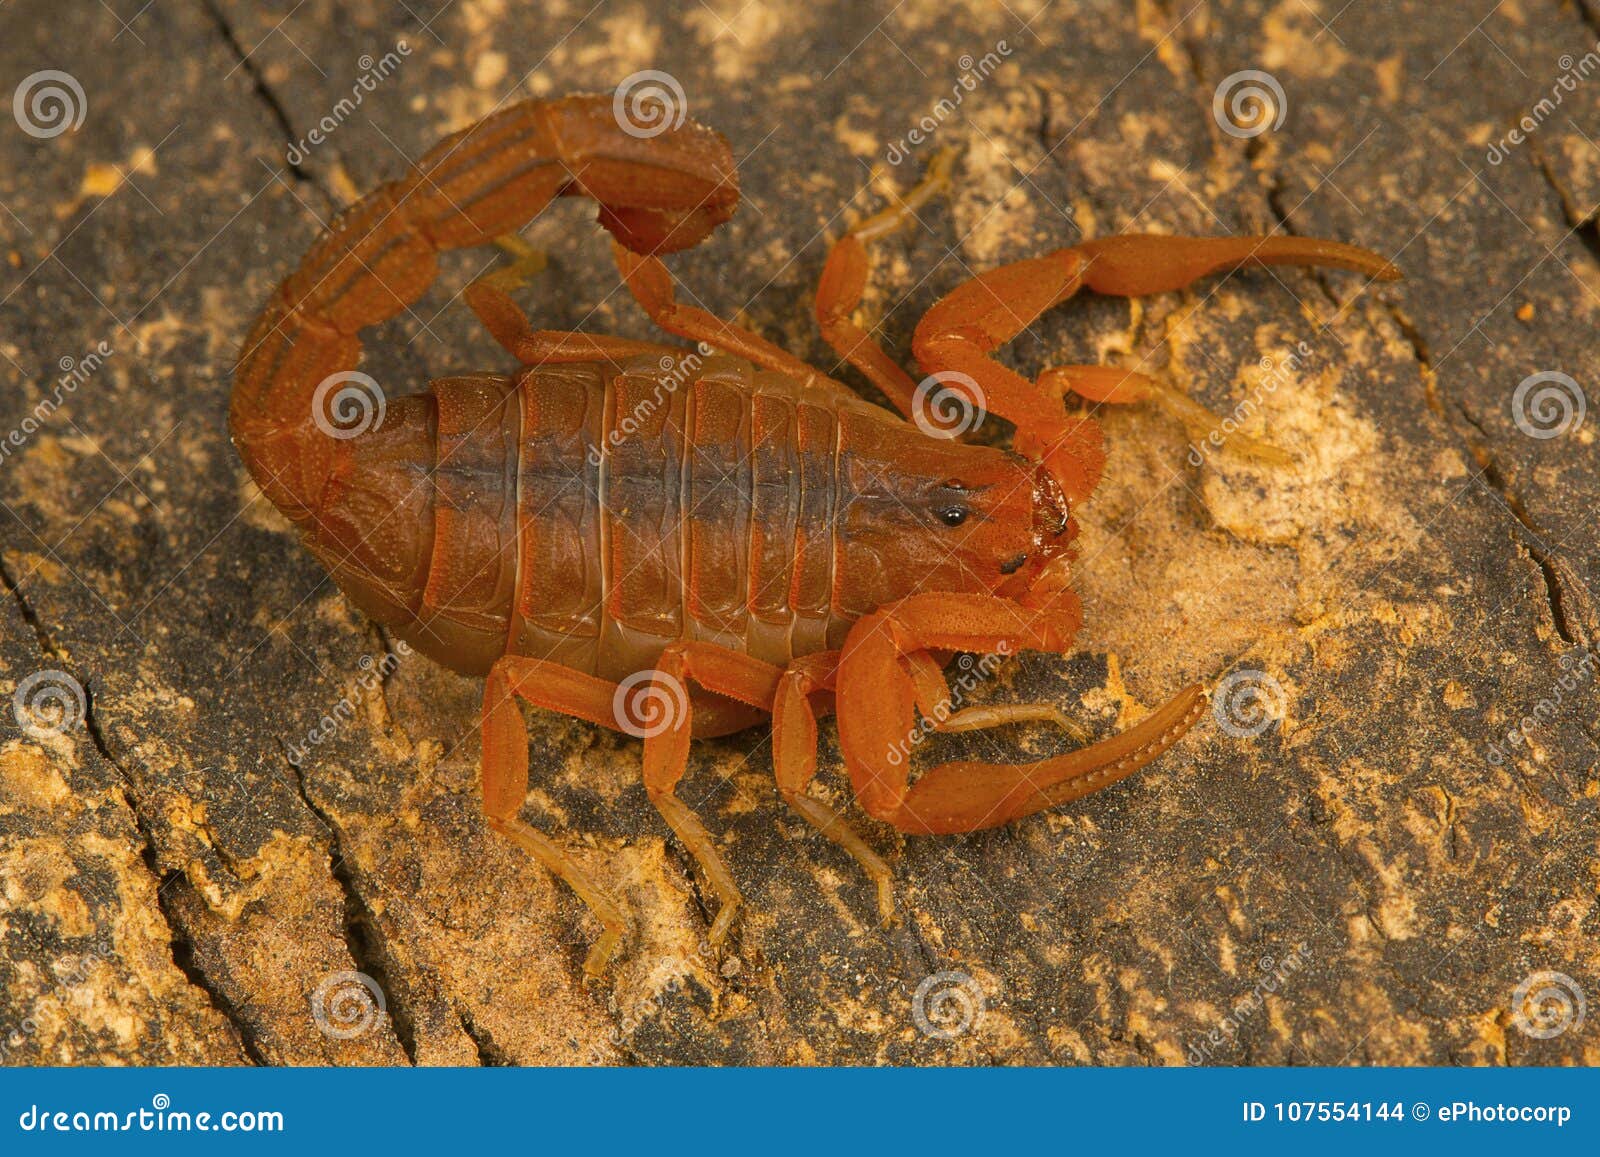 fat tailed scorpion, hottentotta rugiscutis from type locality, chengalpettu